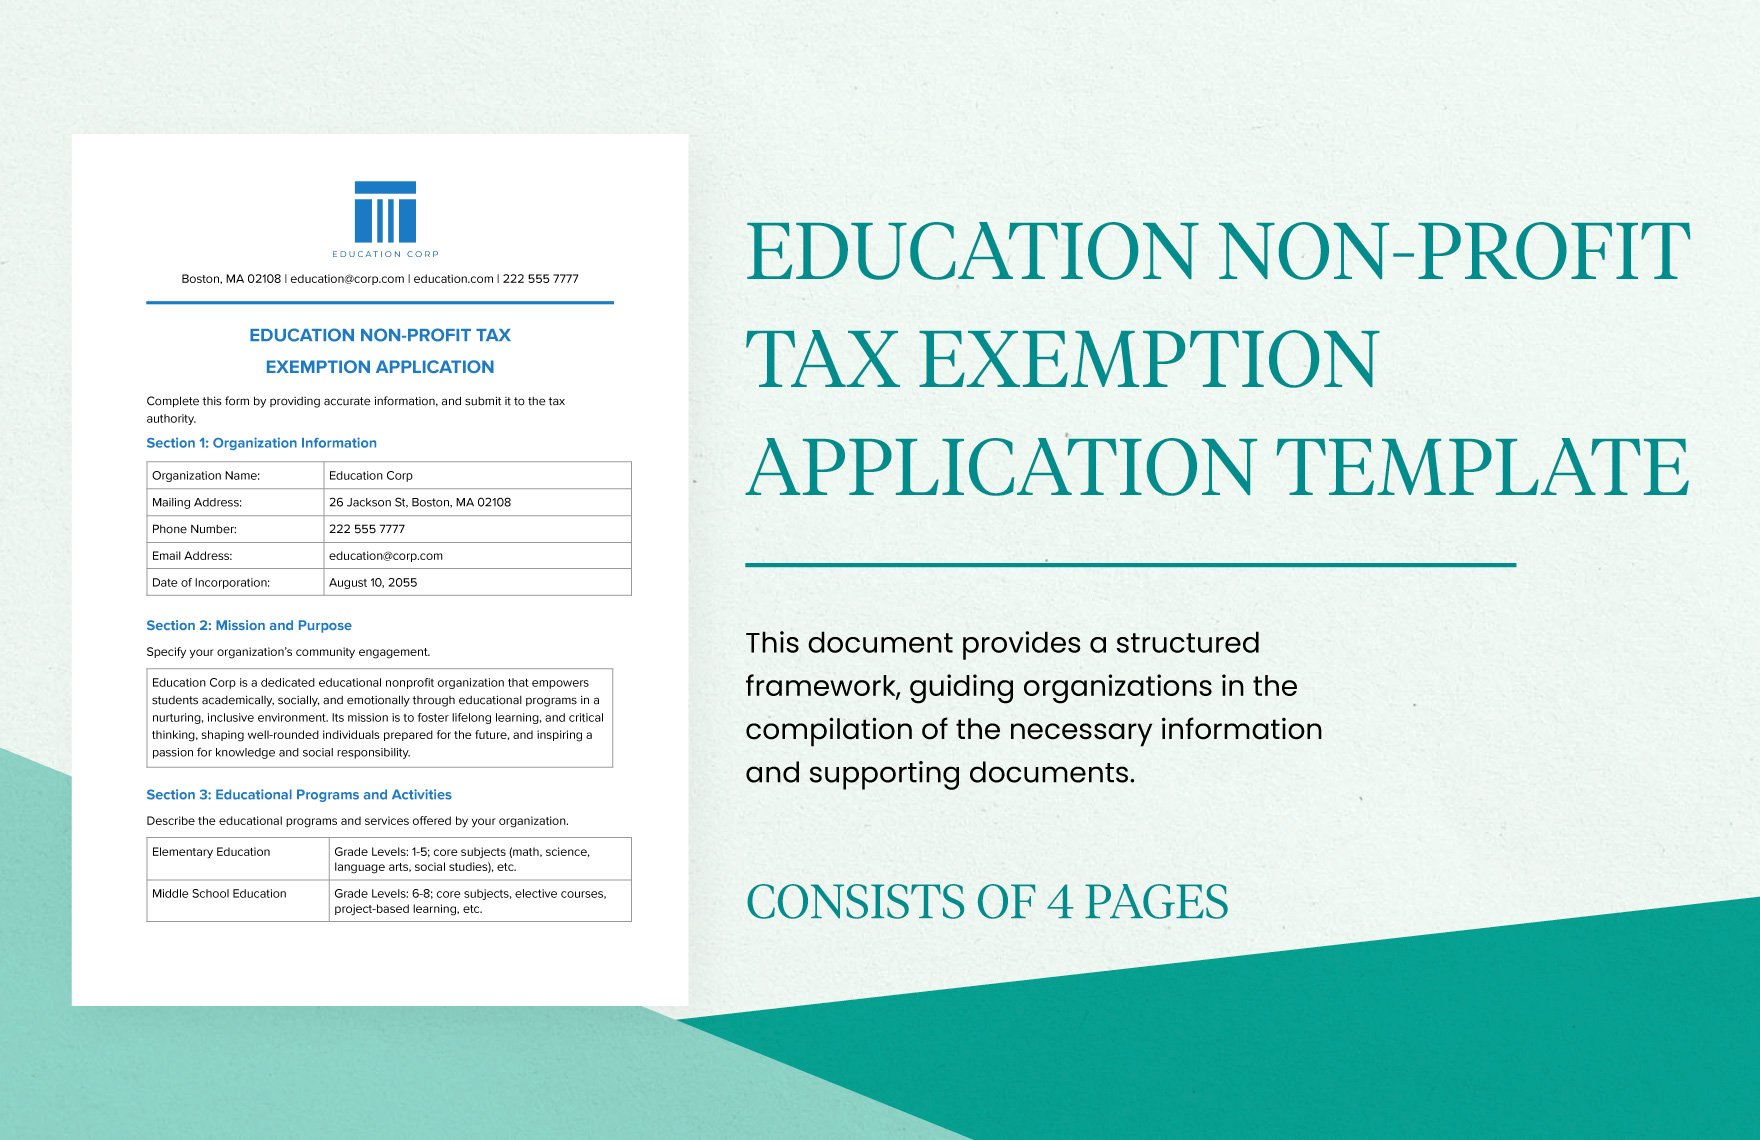 Education Non-Profit Tax Exemption Application Template